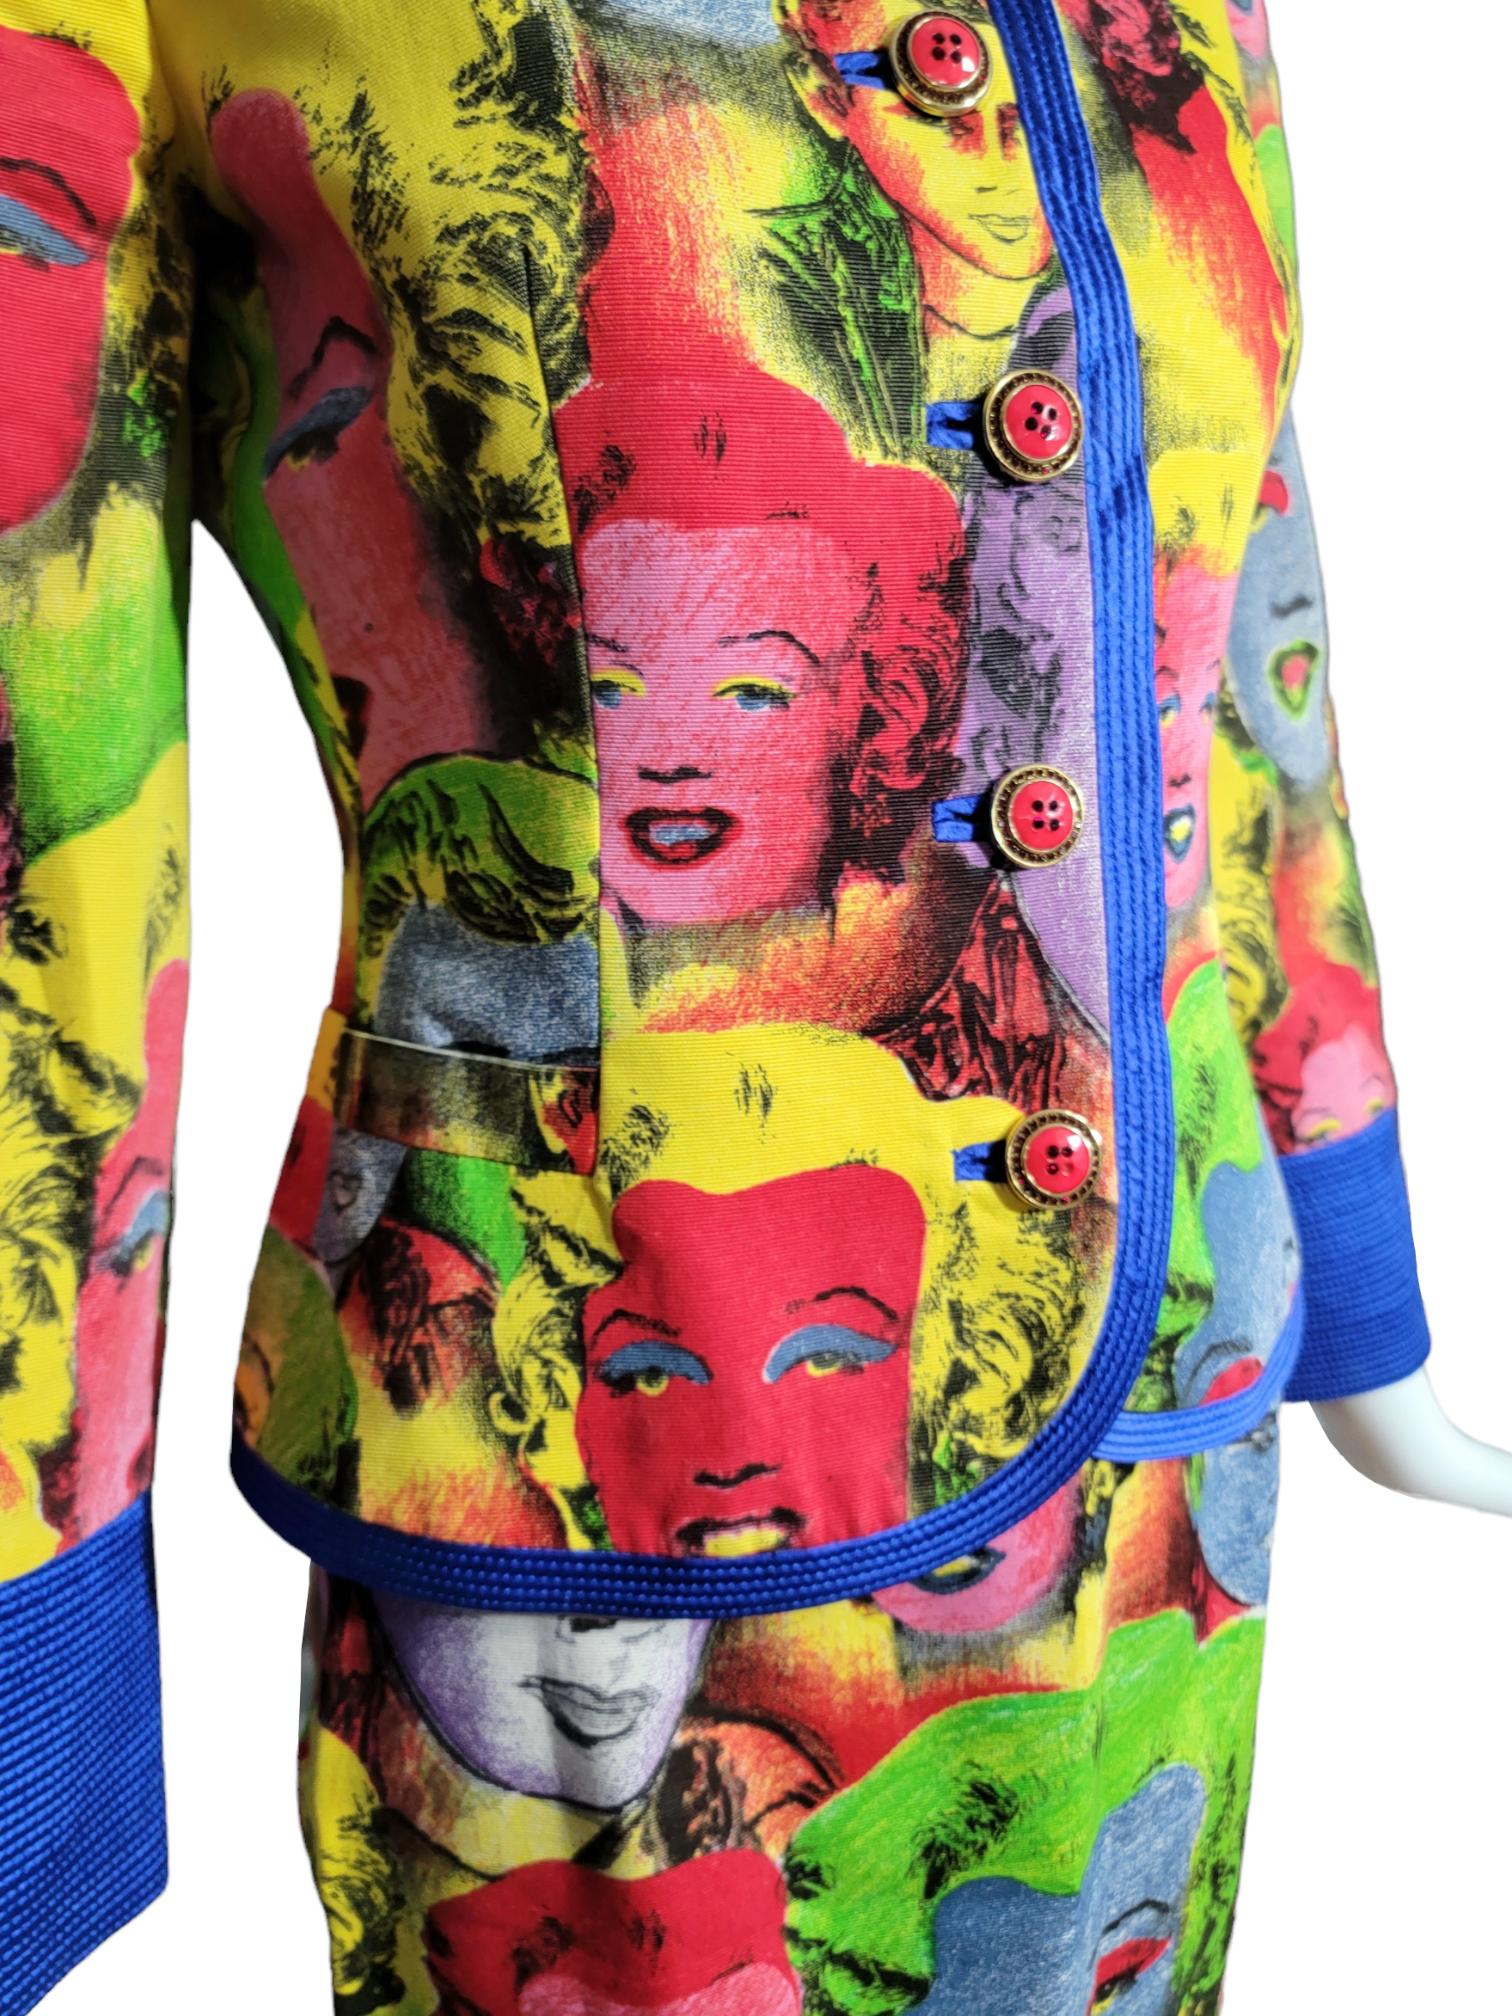  S/S 1991 Gianni Versace Marilyn Monroe Pop Art Warhol Skirt Suit For Sale 1